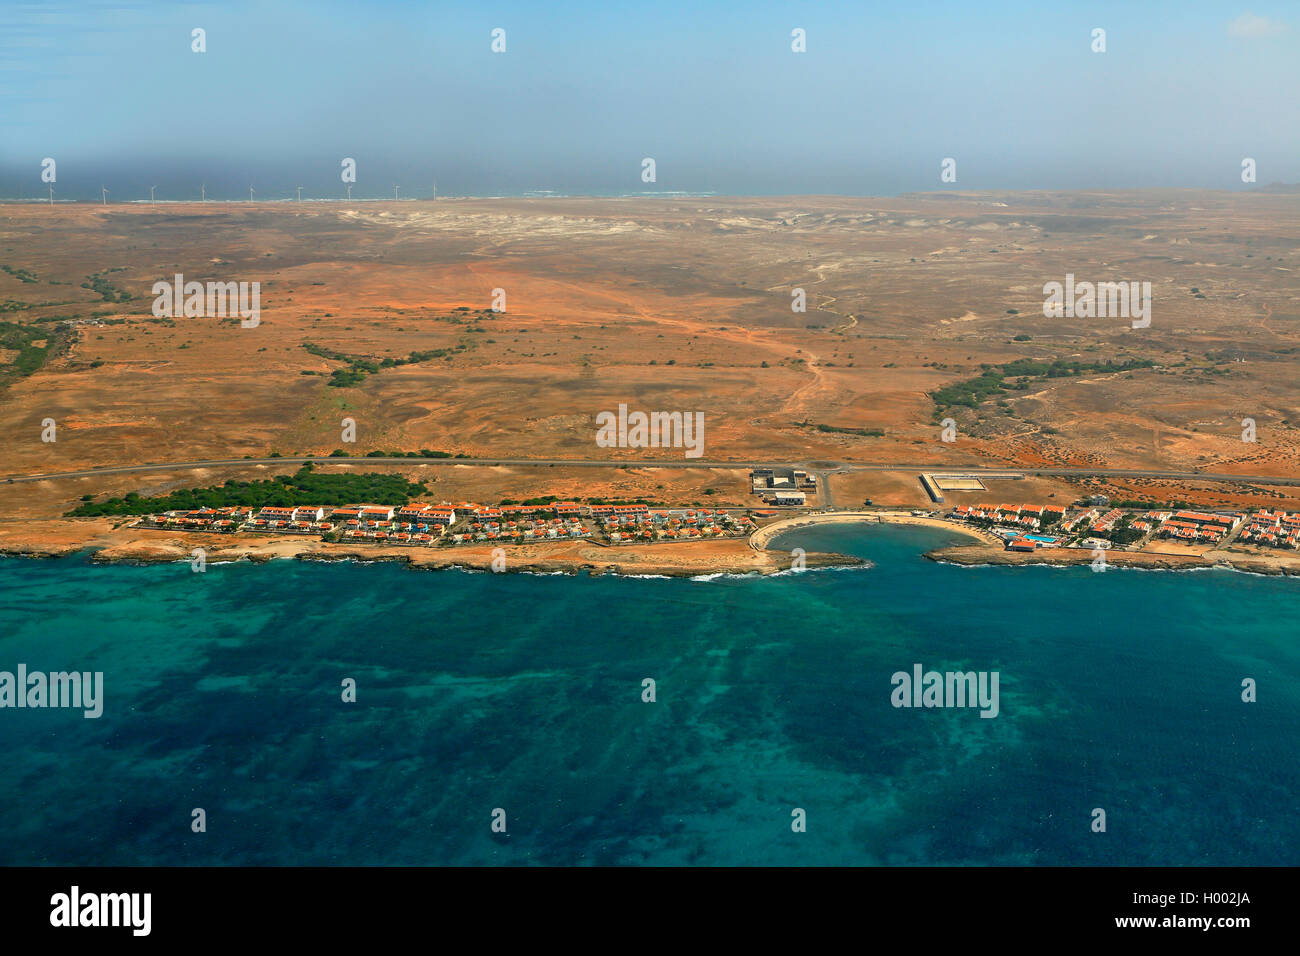 island of Sa - coast at Murdeira, aerial image, Cap Verde Islands, Sal Stock Photo